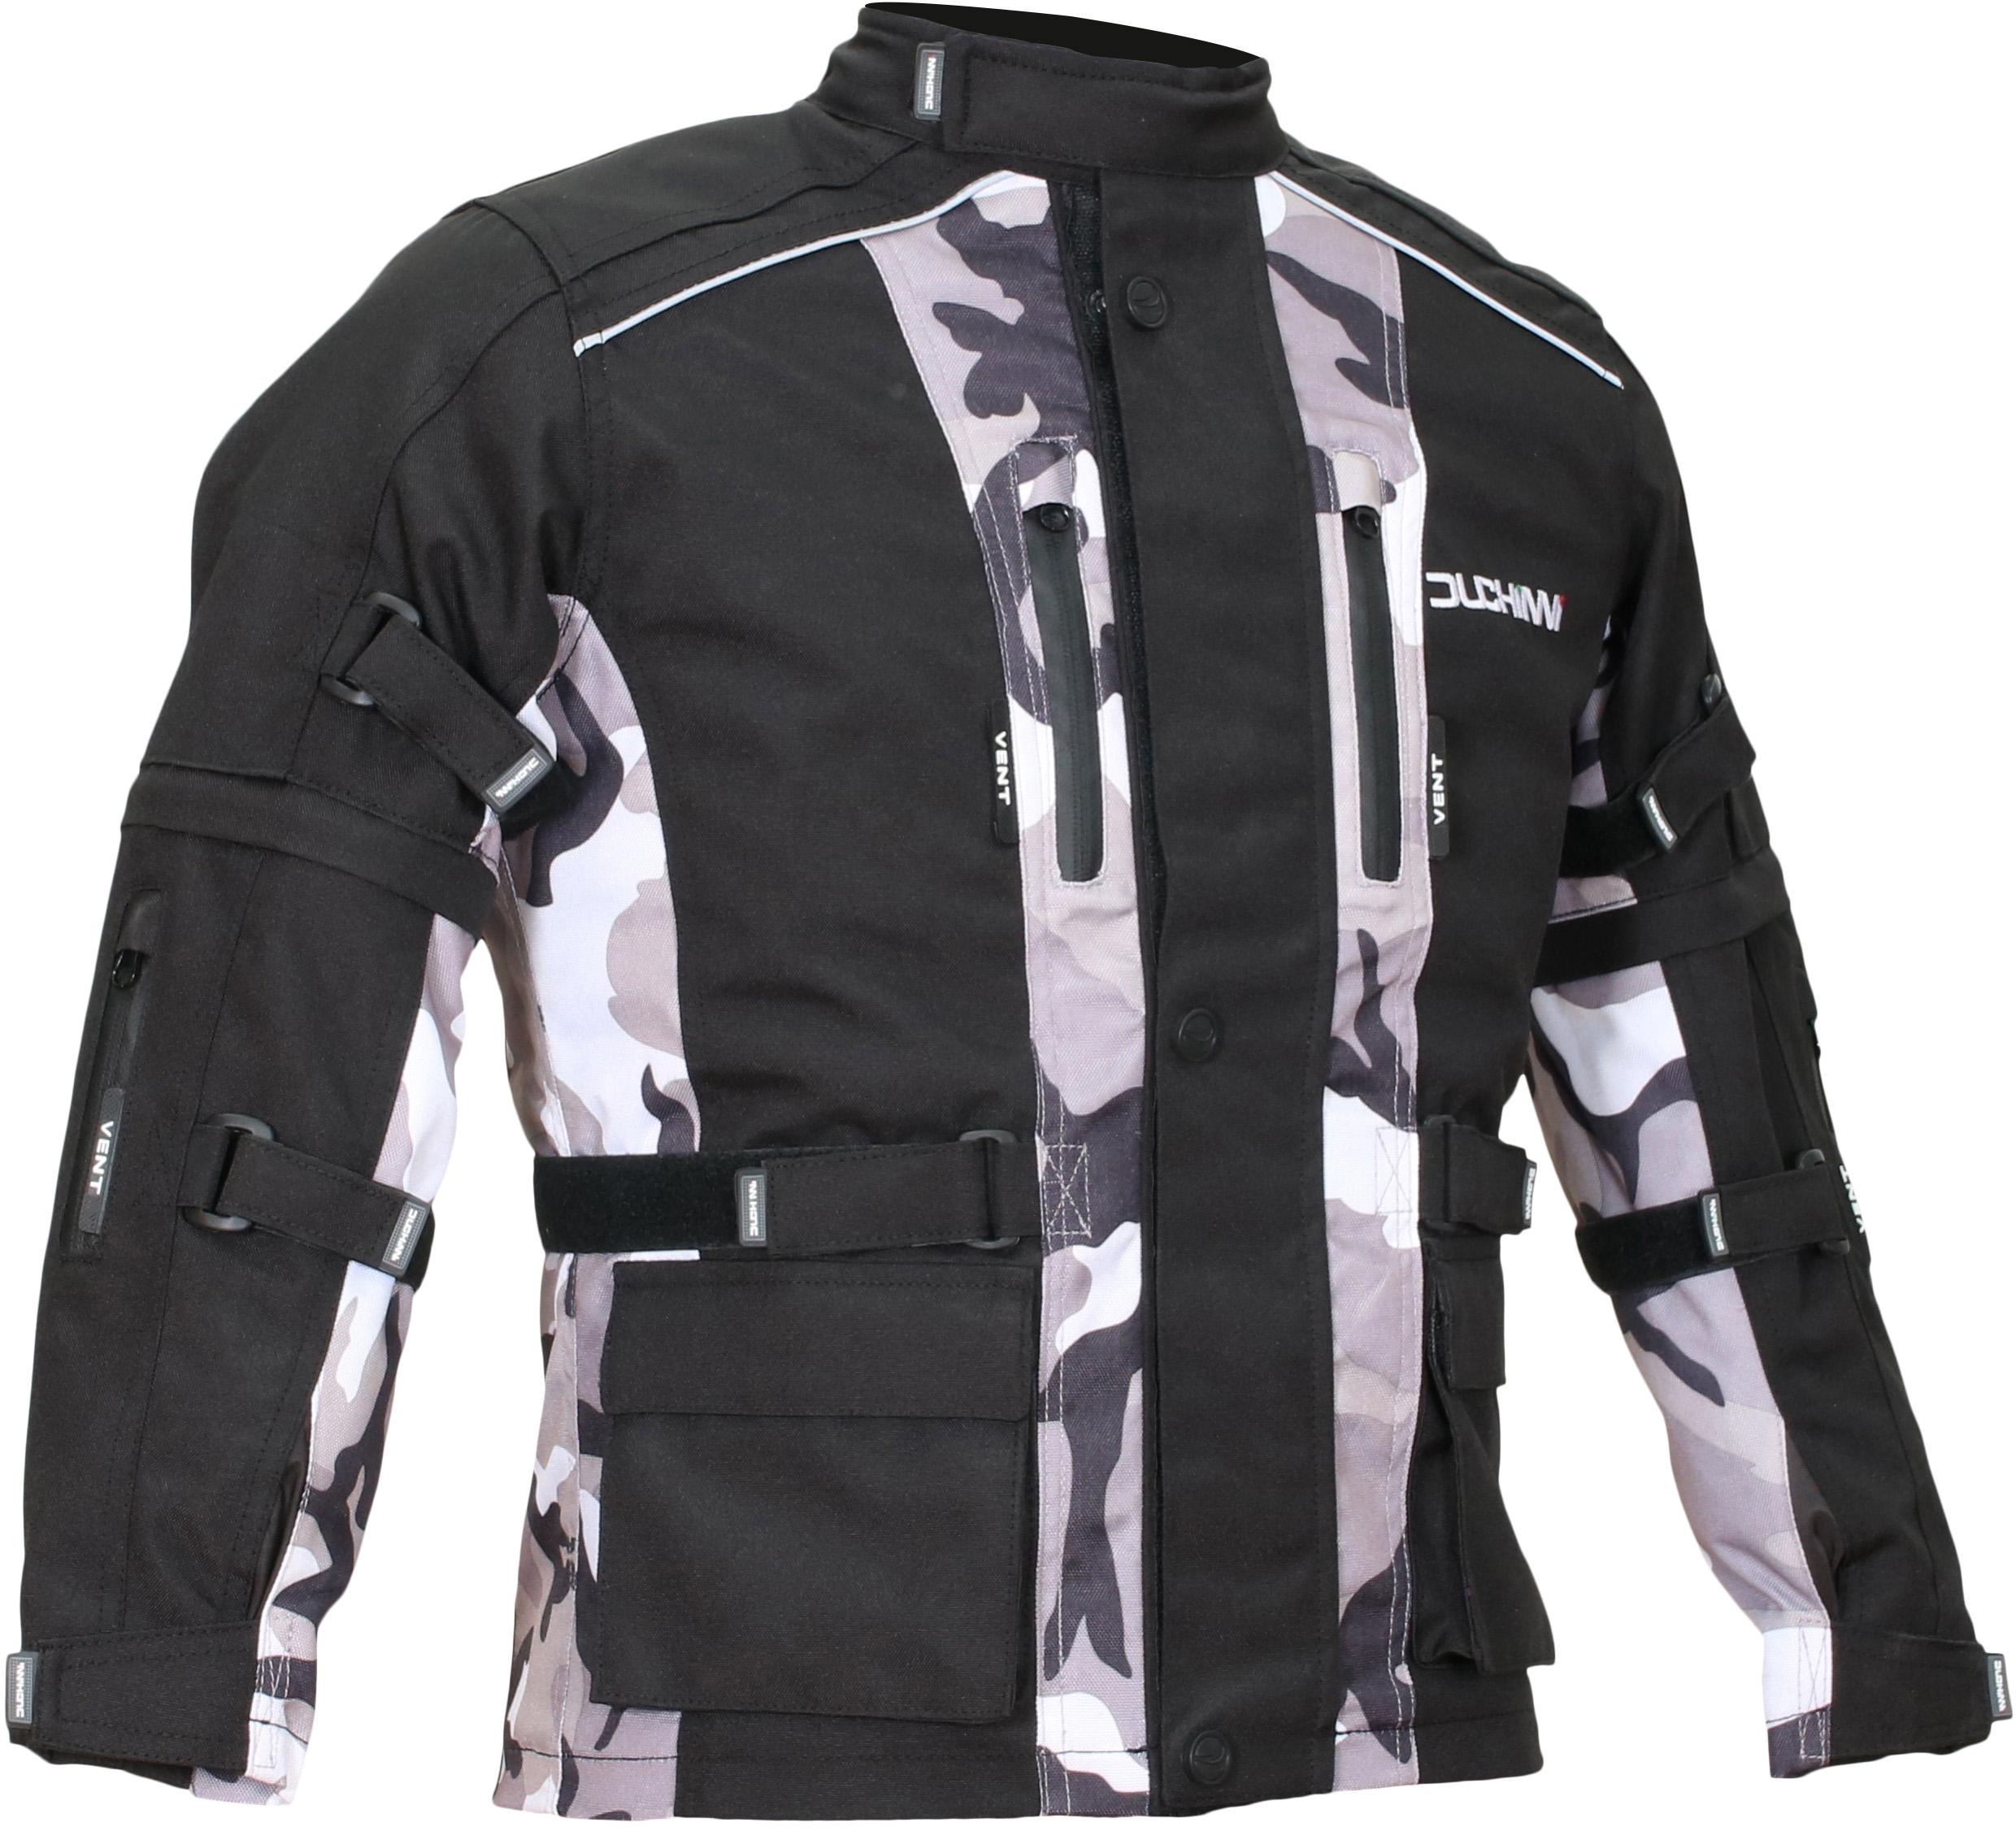 Duchinni Jago Youth Motorcycle Jacket - Black And Camo, L